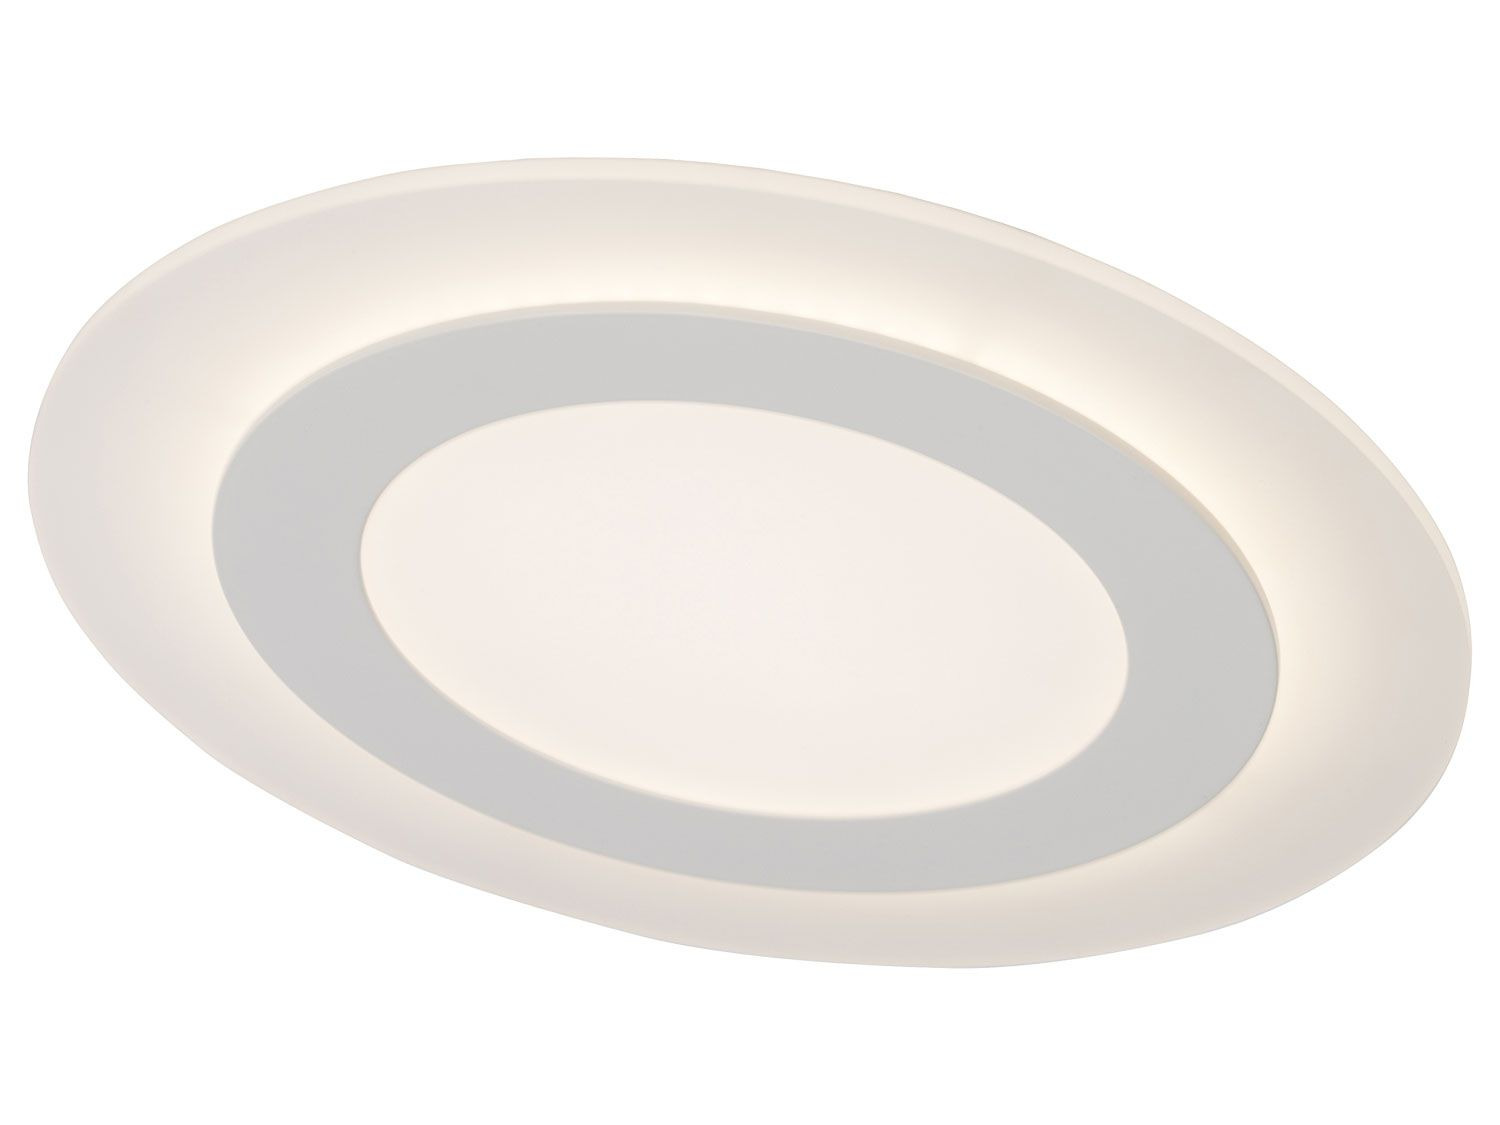 AEG LED Deckenleuchte »Karia« 35 cm, weiß | LIDL